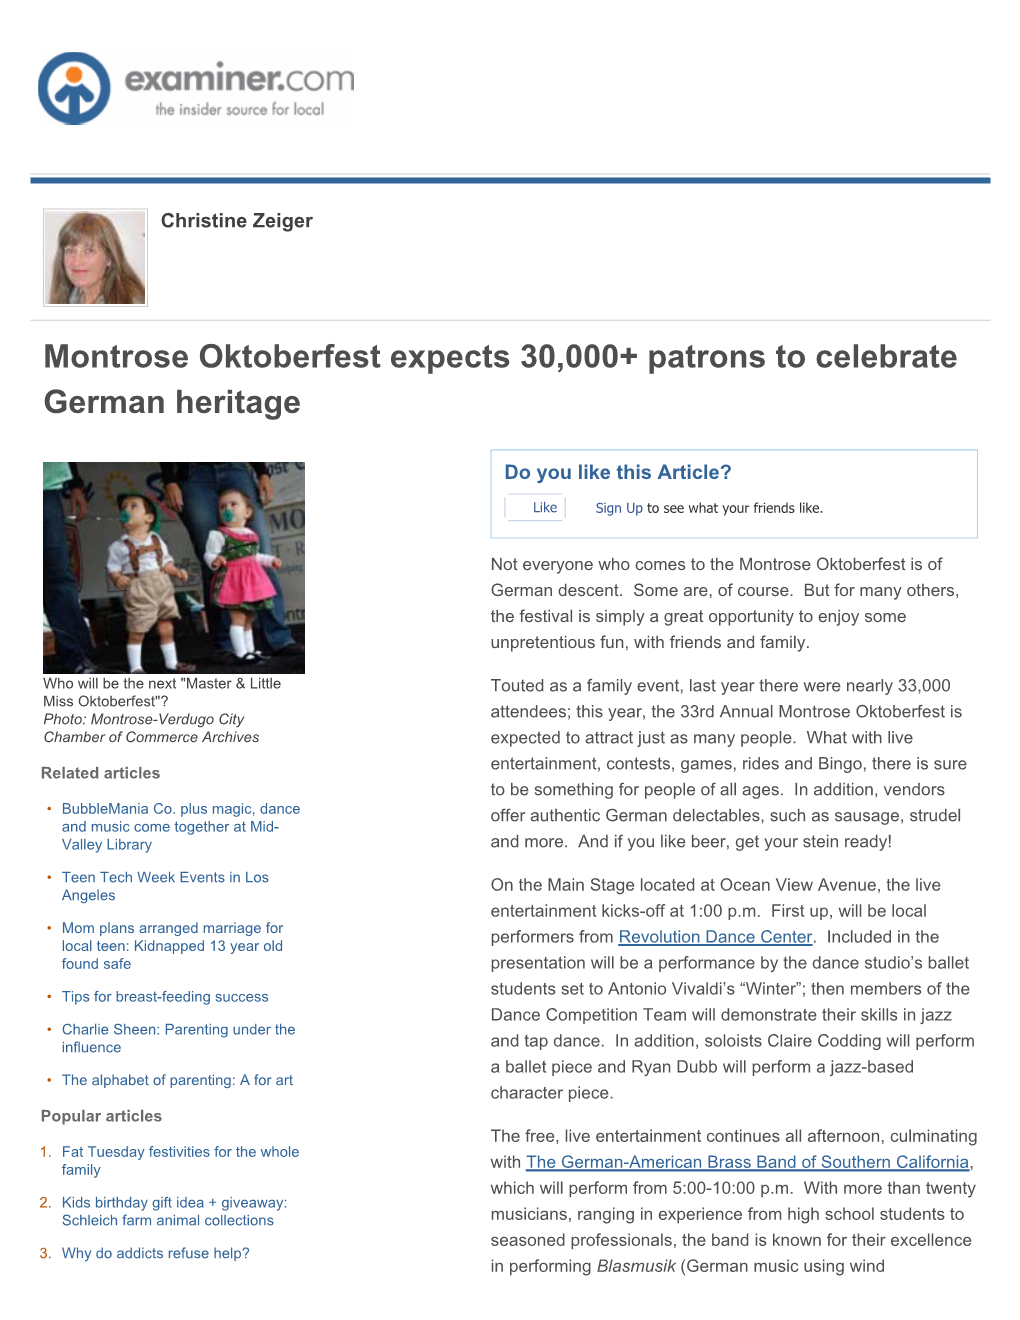 Montrose Oktoberfest Expects 30,000+ Patrons to Celebrate German Heritage